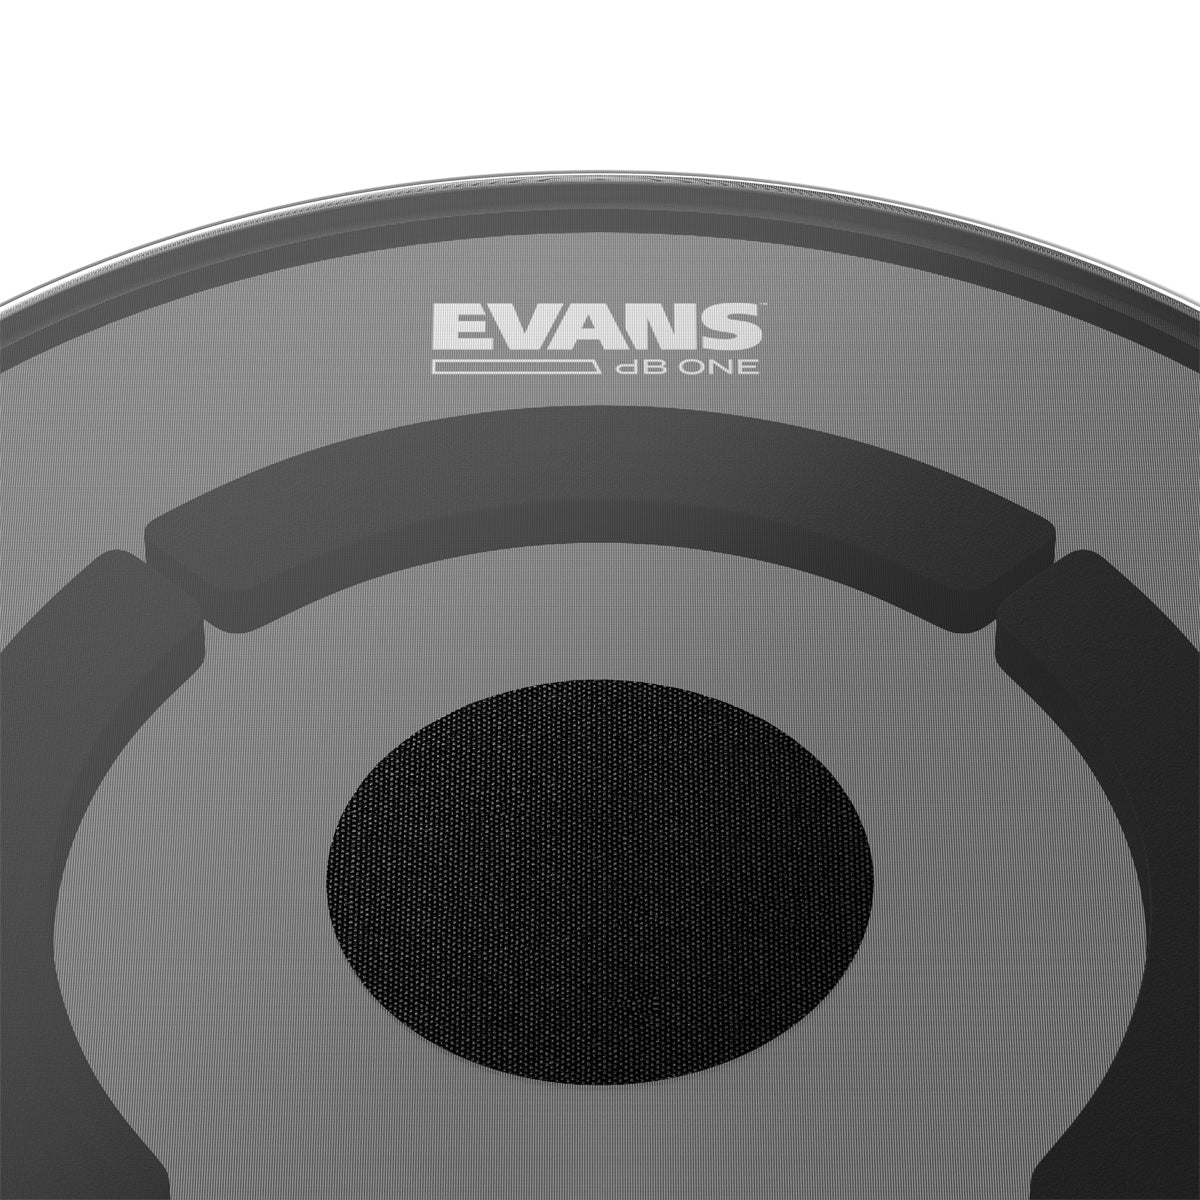 Evans dB One Reduced Volume Drum Heads